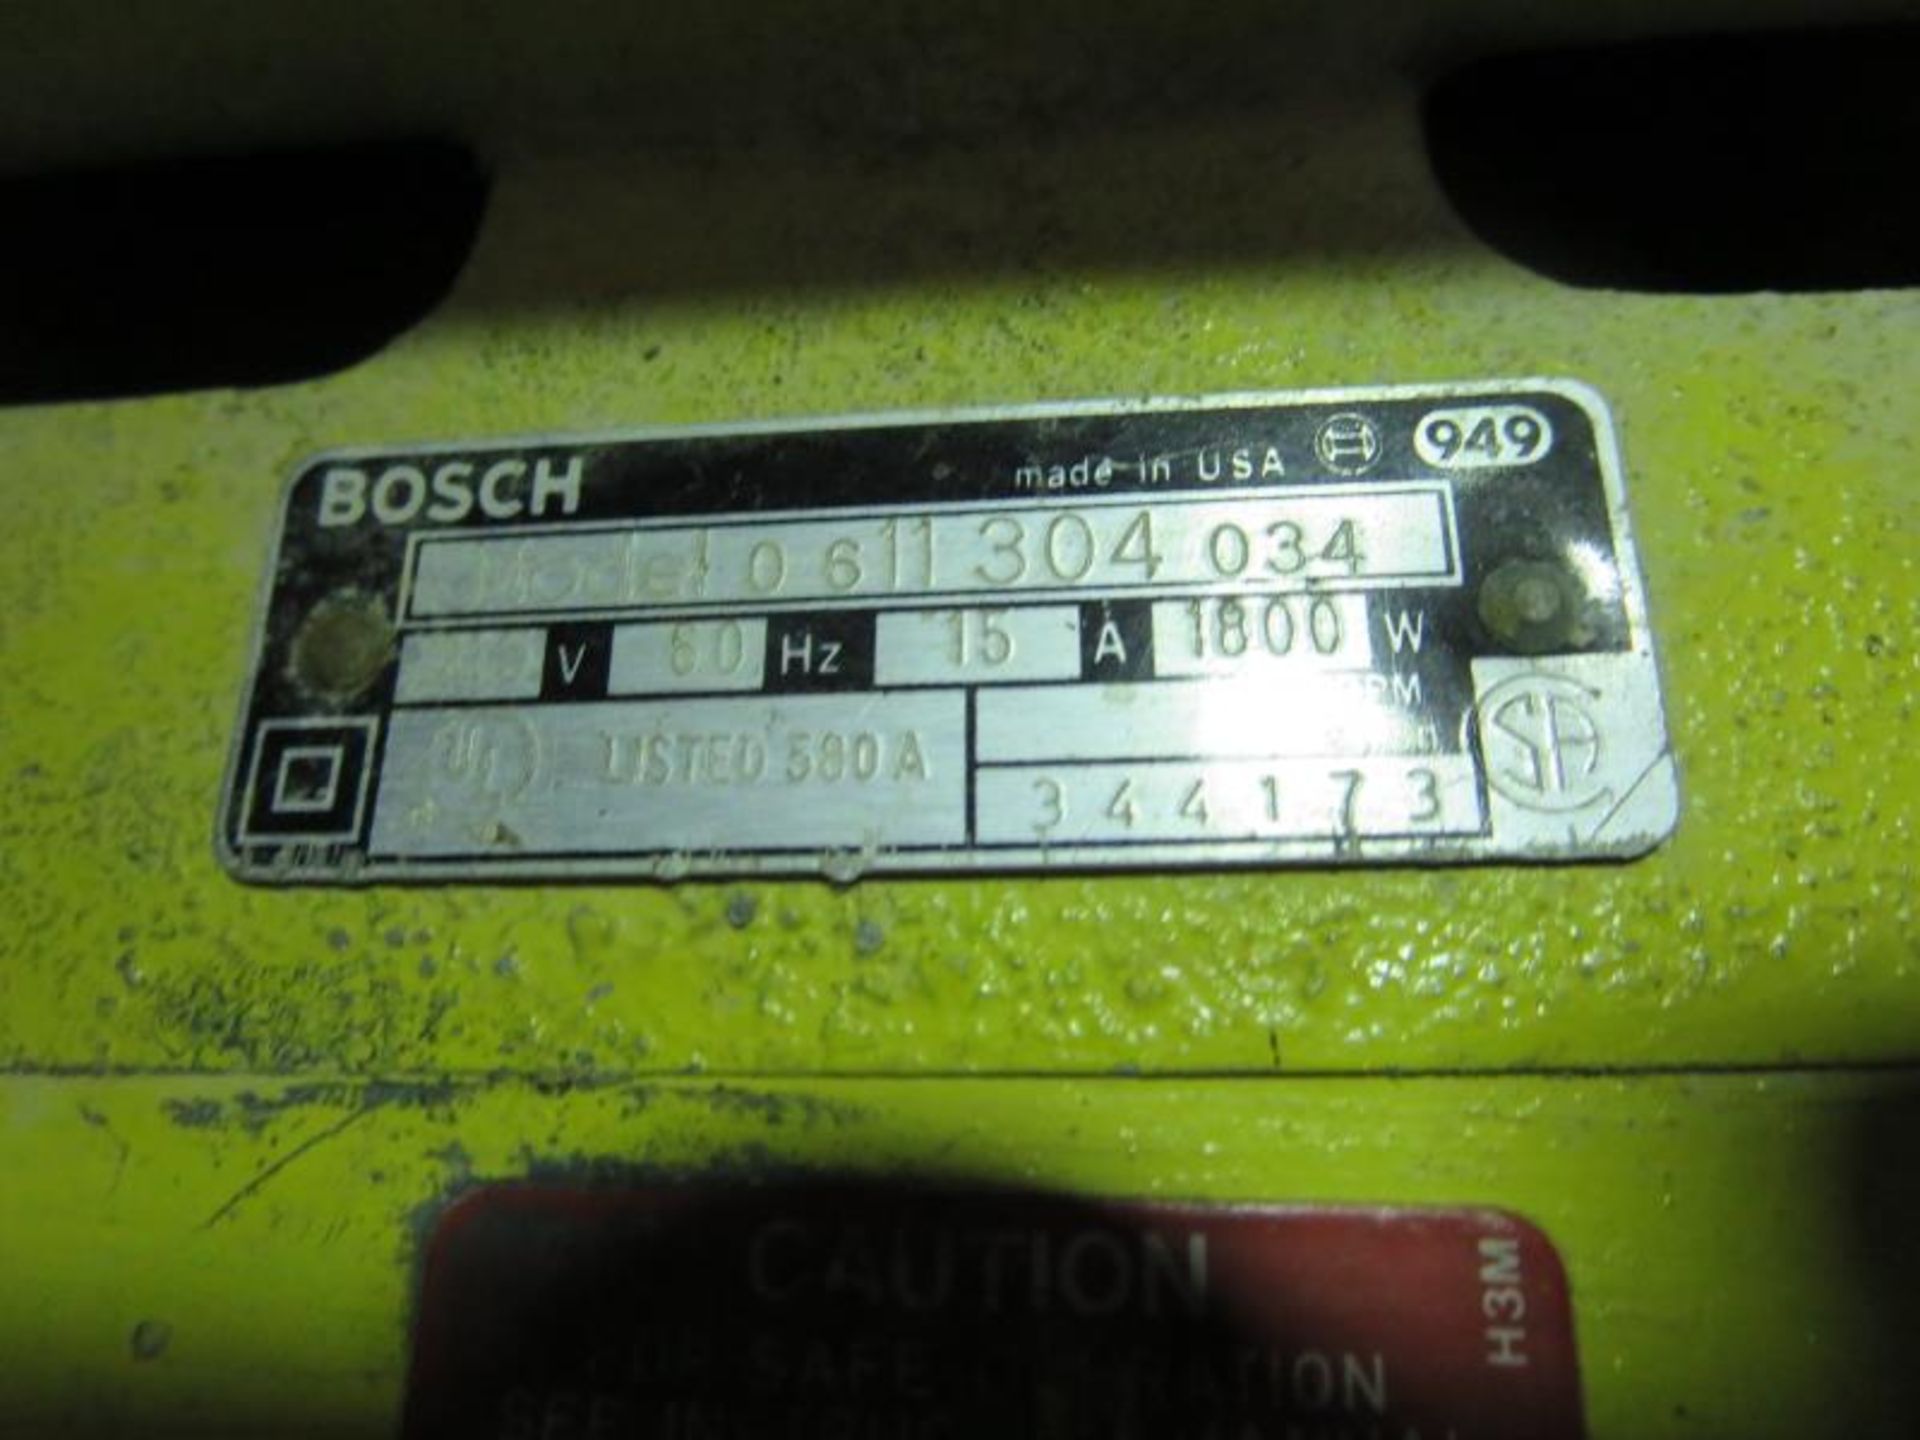 Bosch 611304034 Electric Jack Hammer; 120v. 1800w, SN# 344173. HIT# 2123607. Loc: 1101-1 Mezz - Image 2 of 2